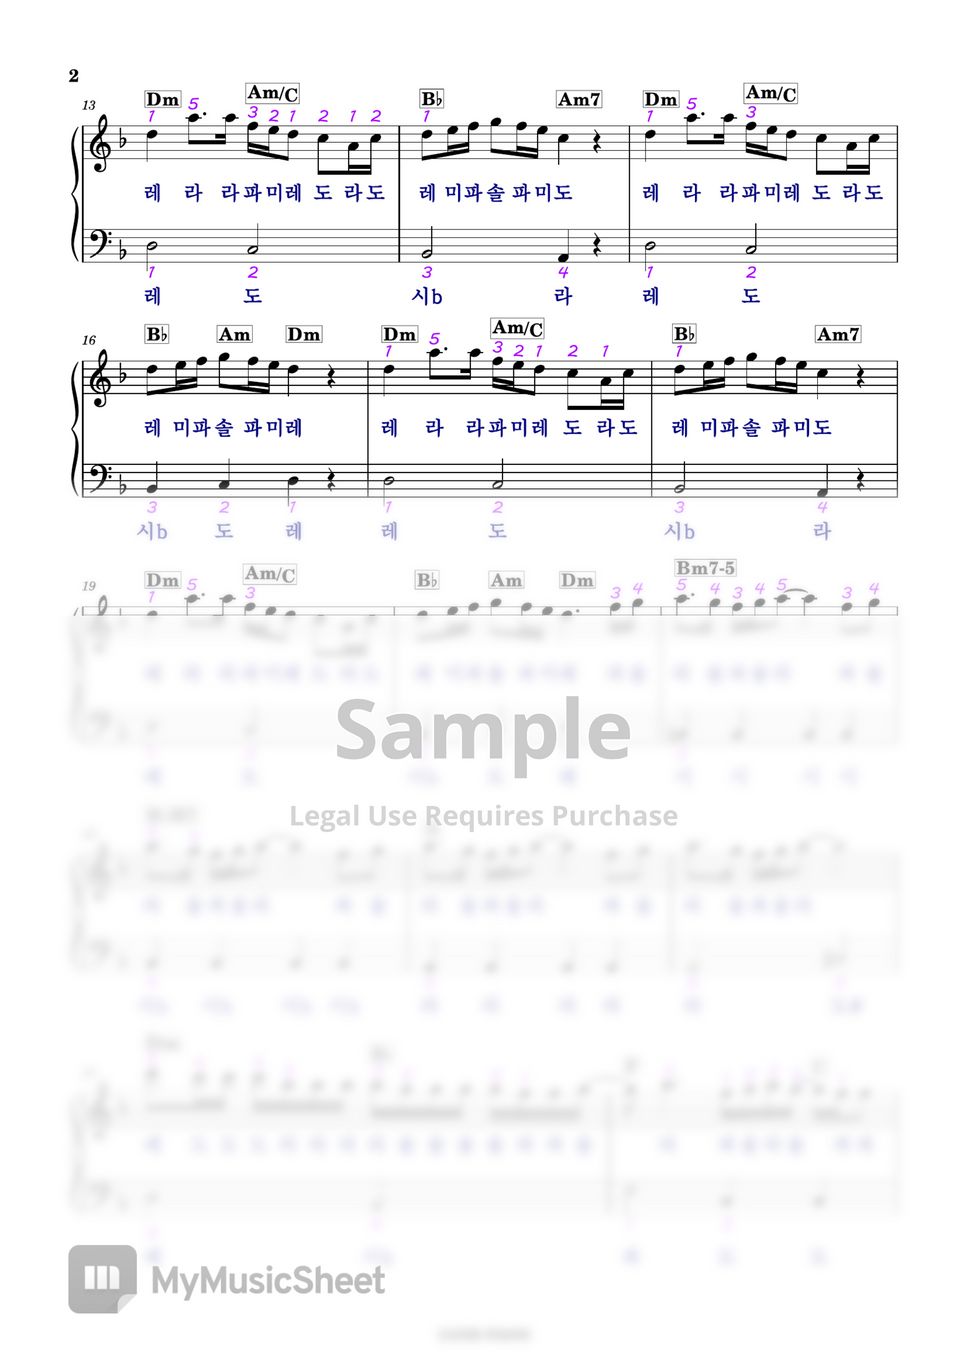 RADWIMPS - 스즈메의 문단속 OST - すずめ (Suzume, 참새) (계이름악보) by Lucid Piano